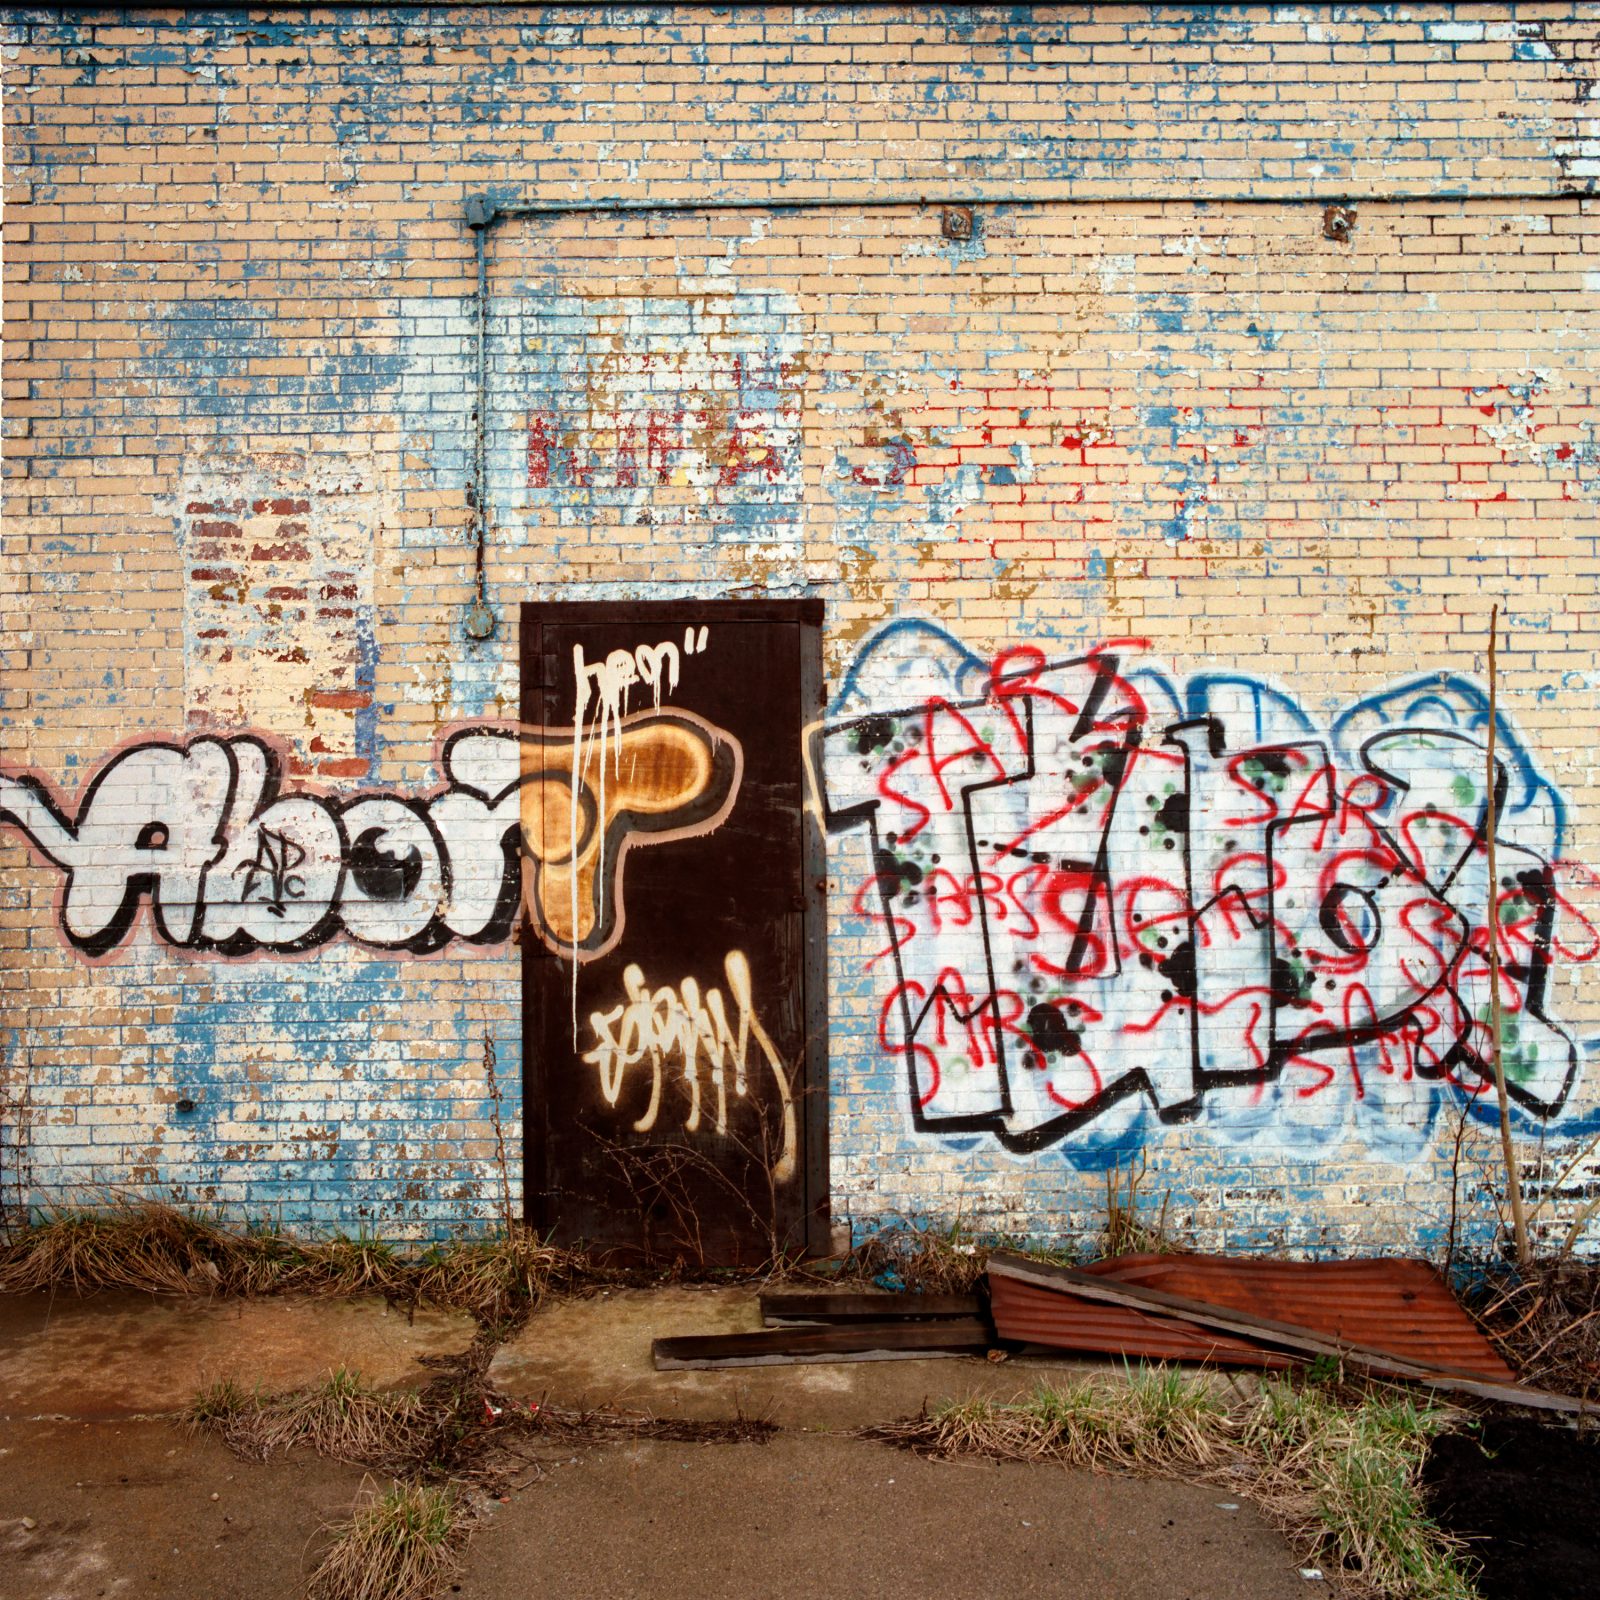 Turdl graffiti. Detroit, Michigan.